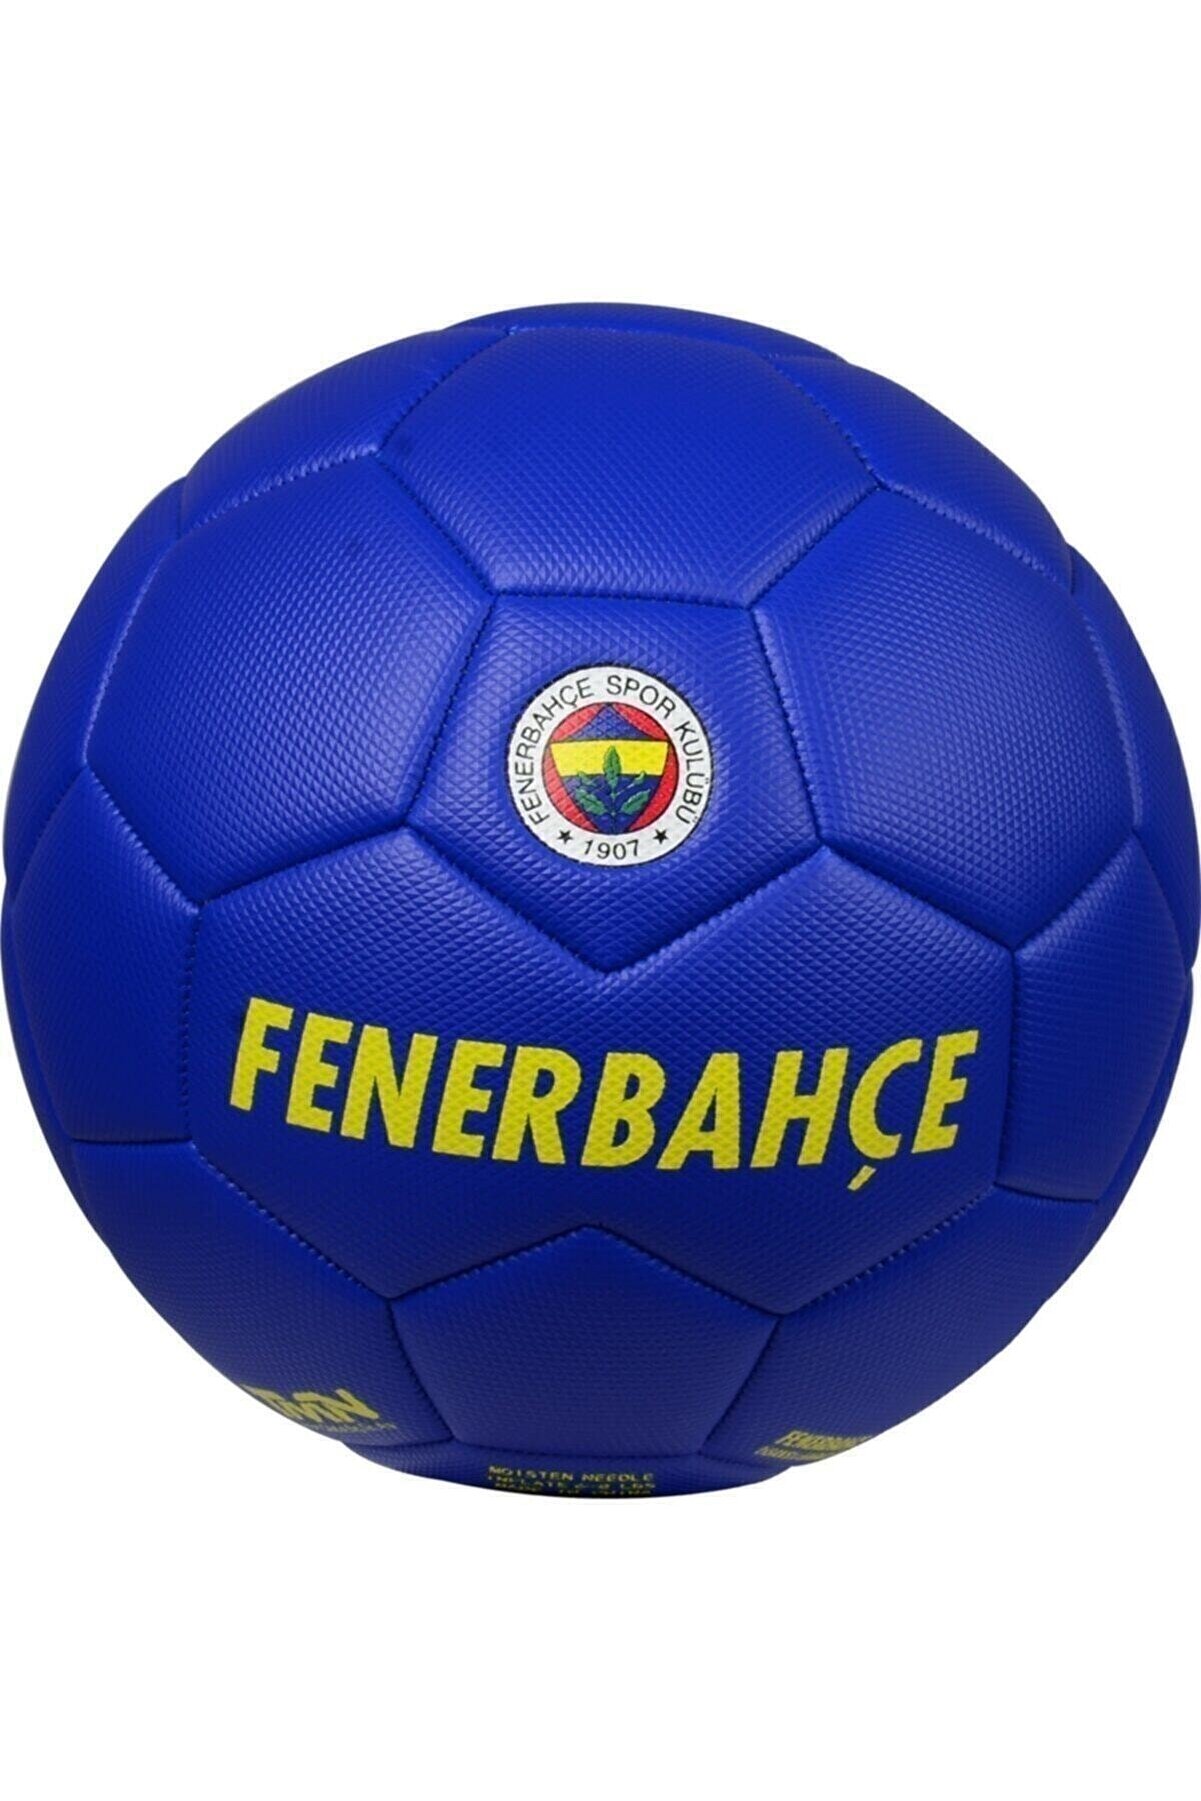 Timon Fenerbahçe Orjinal Lisanslı Futbol Topu - Lacivert